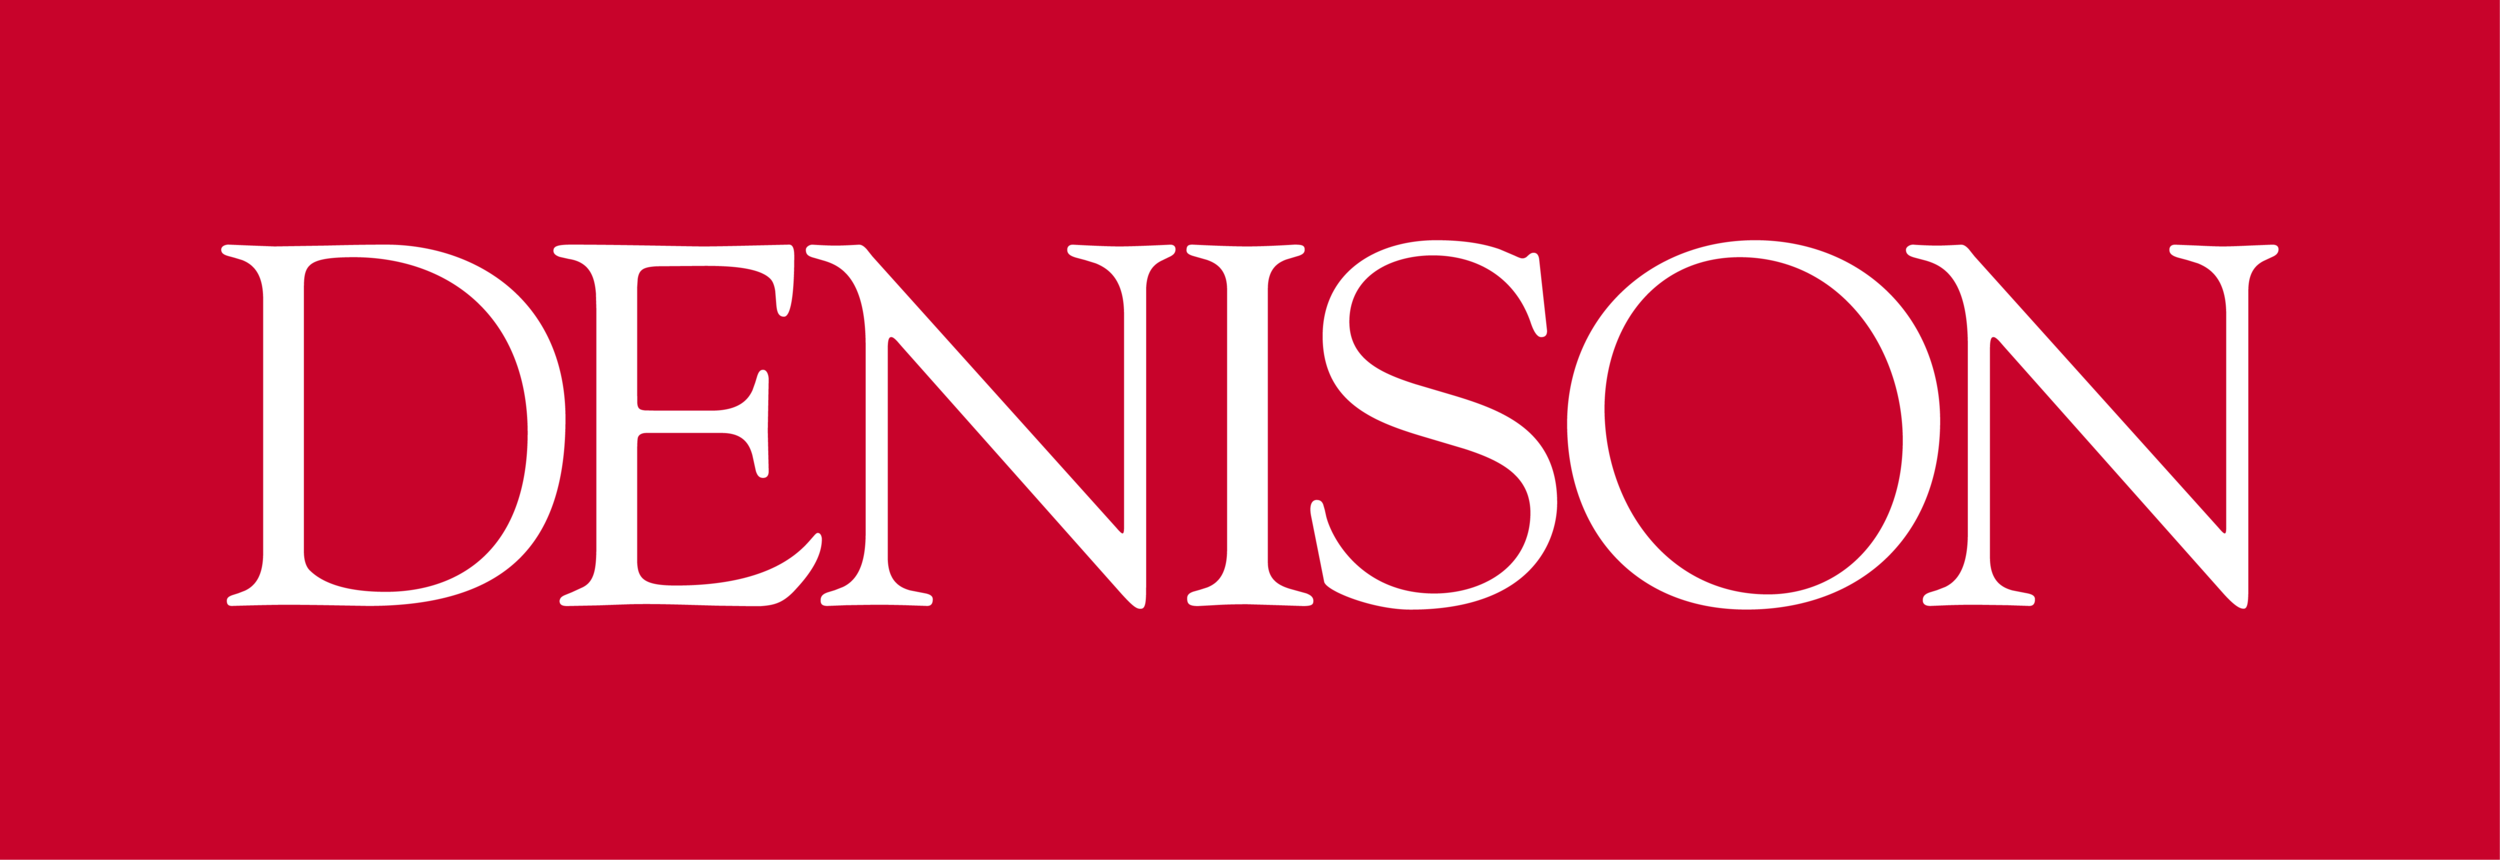 denison-university-logo.png